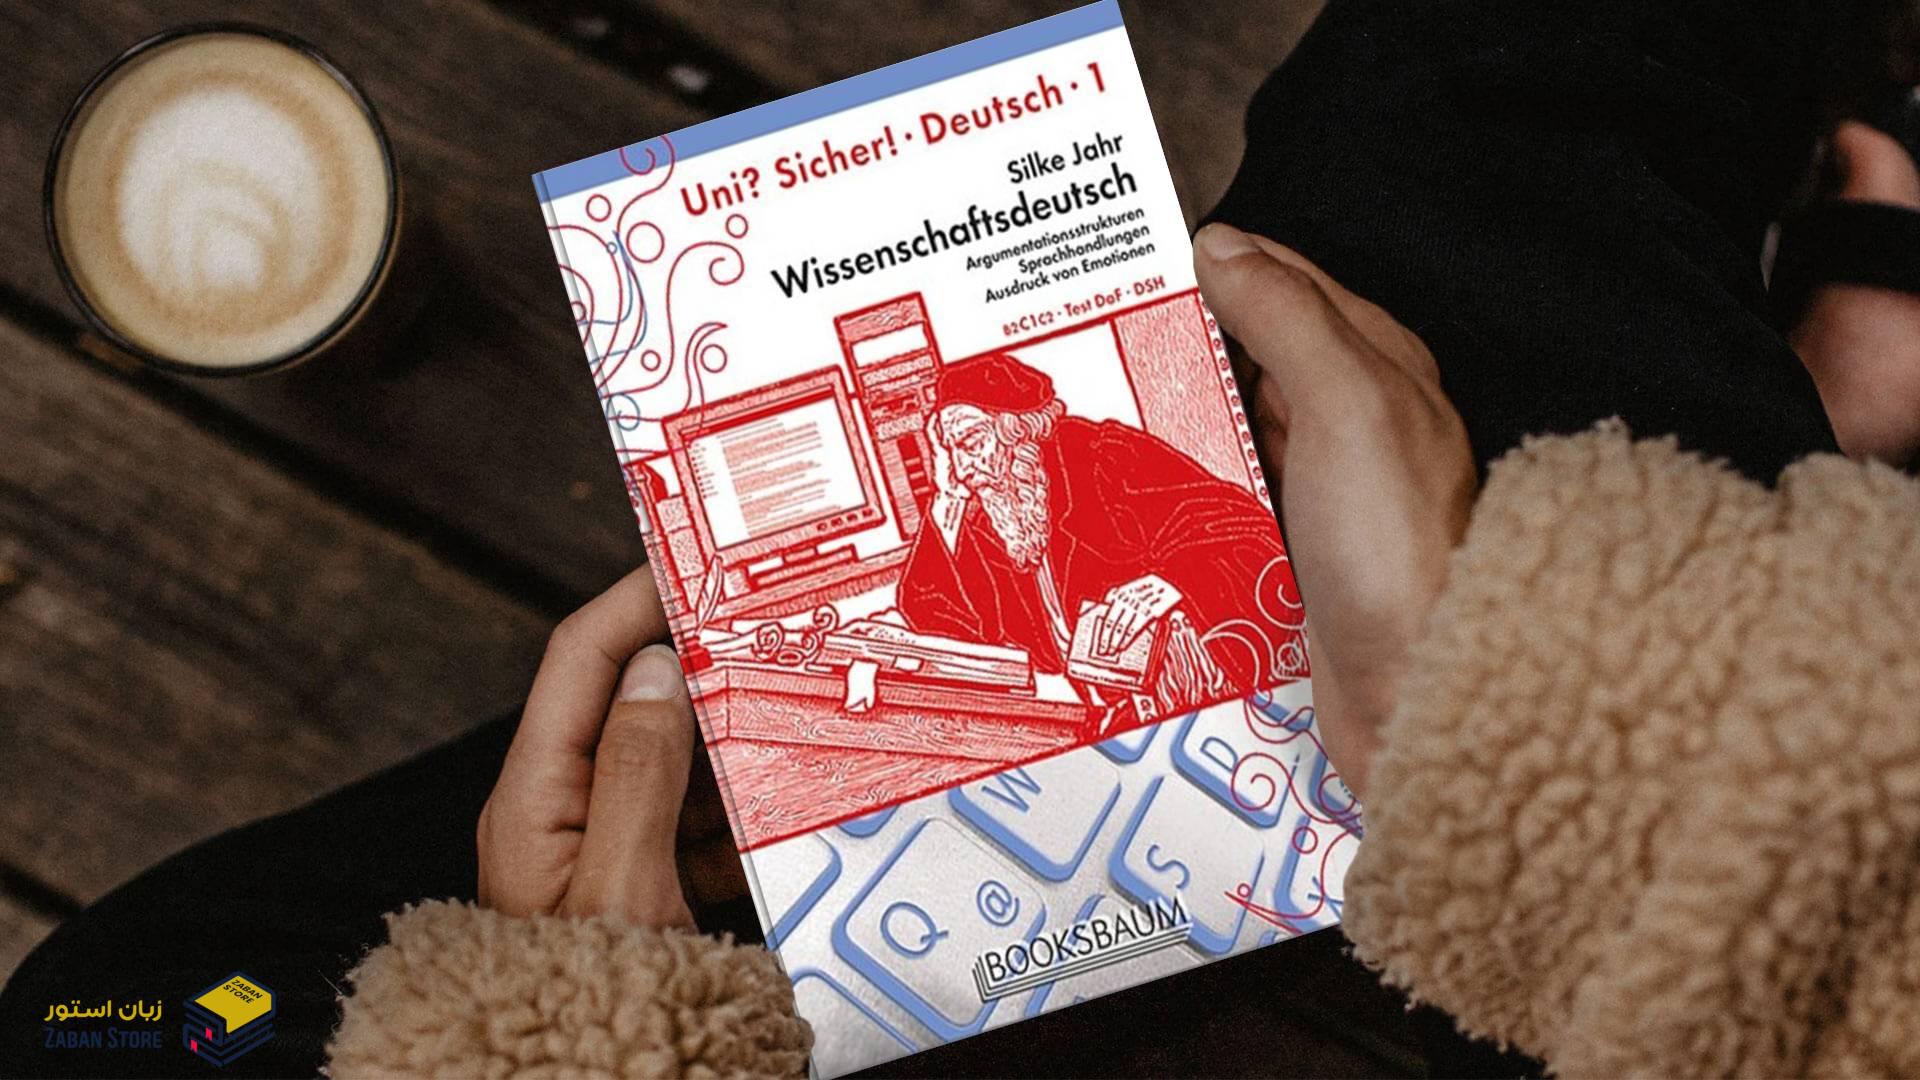 خرید کتاب زبان آلمانی | انتشارات کتاب زبان | Uni Sicher Deutsch 1 Wissenschaftsdeutsch Neu B2 C1 C2 TestDaf DSH FSP | کتاب یونی زیشا یک